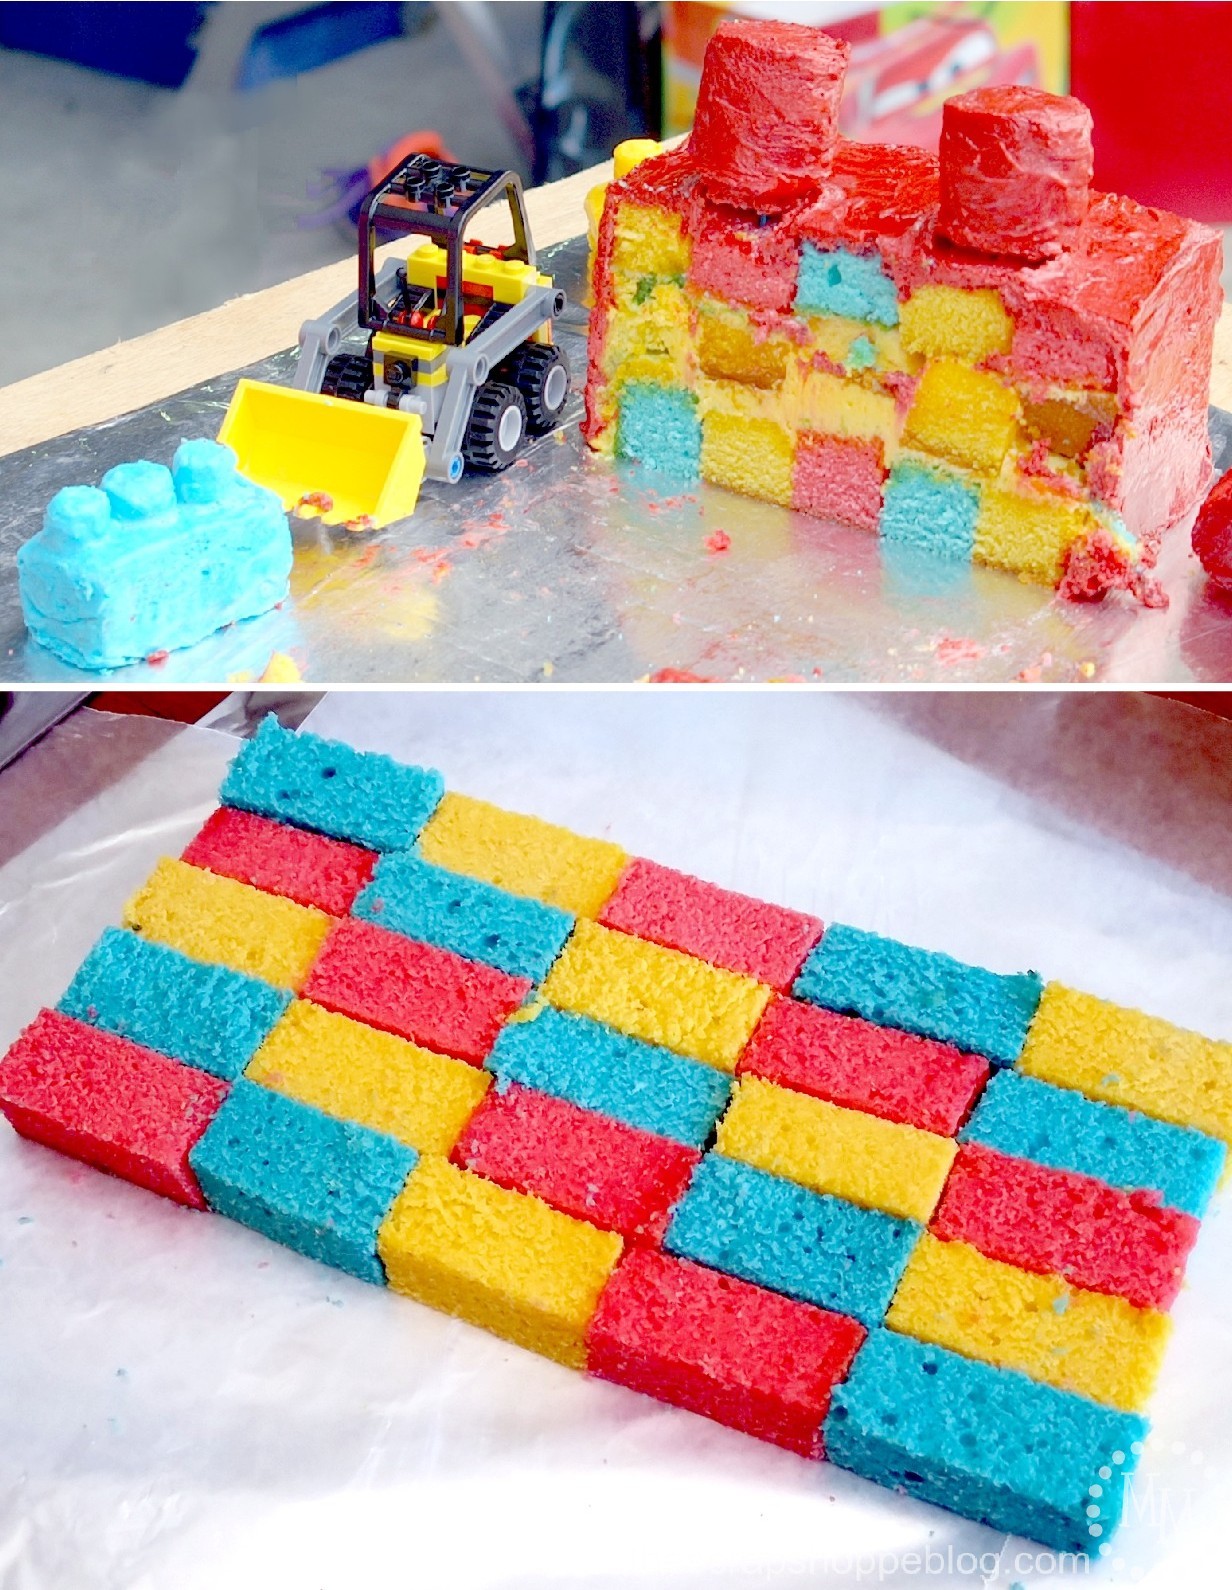 LEGO Birthday Party inside the cake